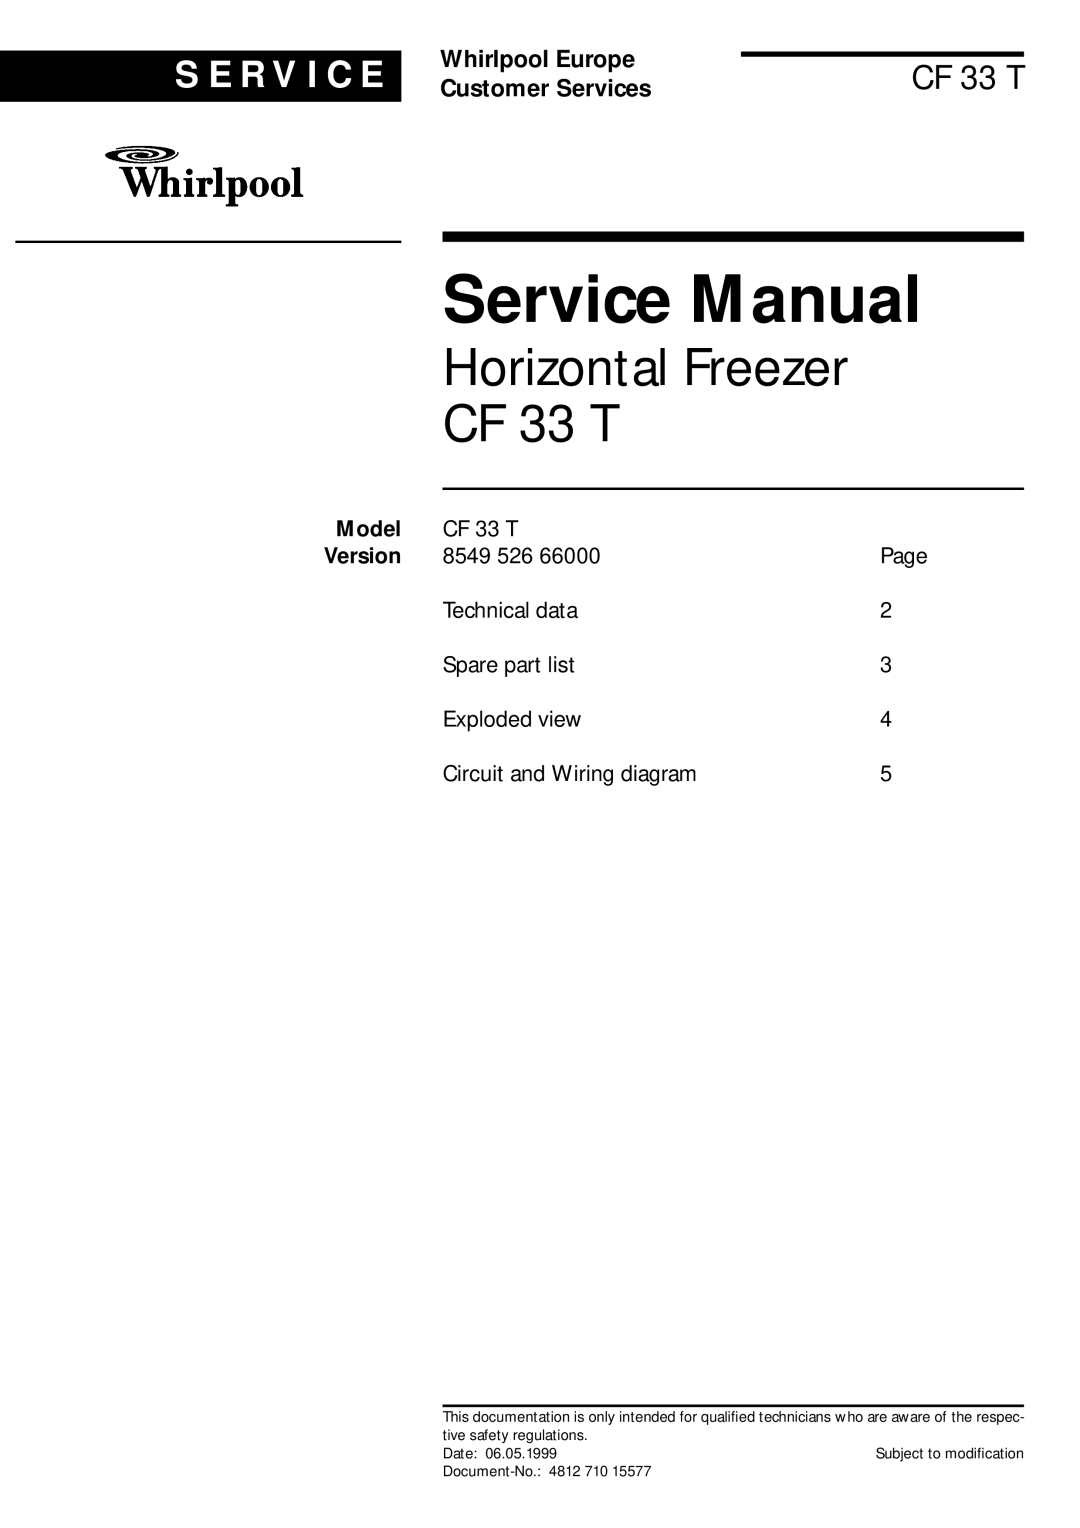 Whirlpool service manual Model, Service Manual, Horizontal Freezer CF 33 T, S E R V I C E, Whirlpool Europe 